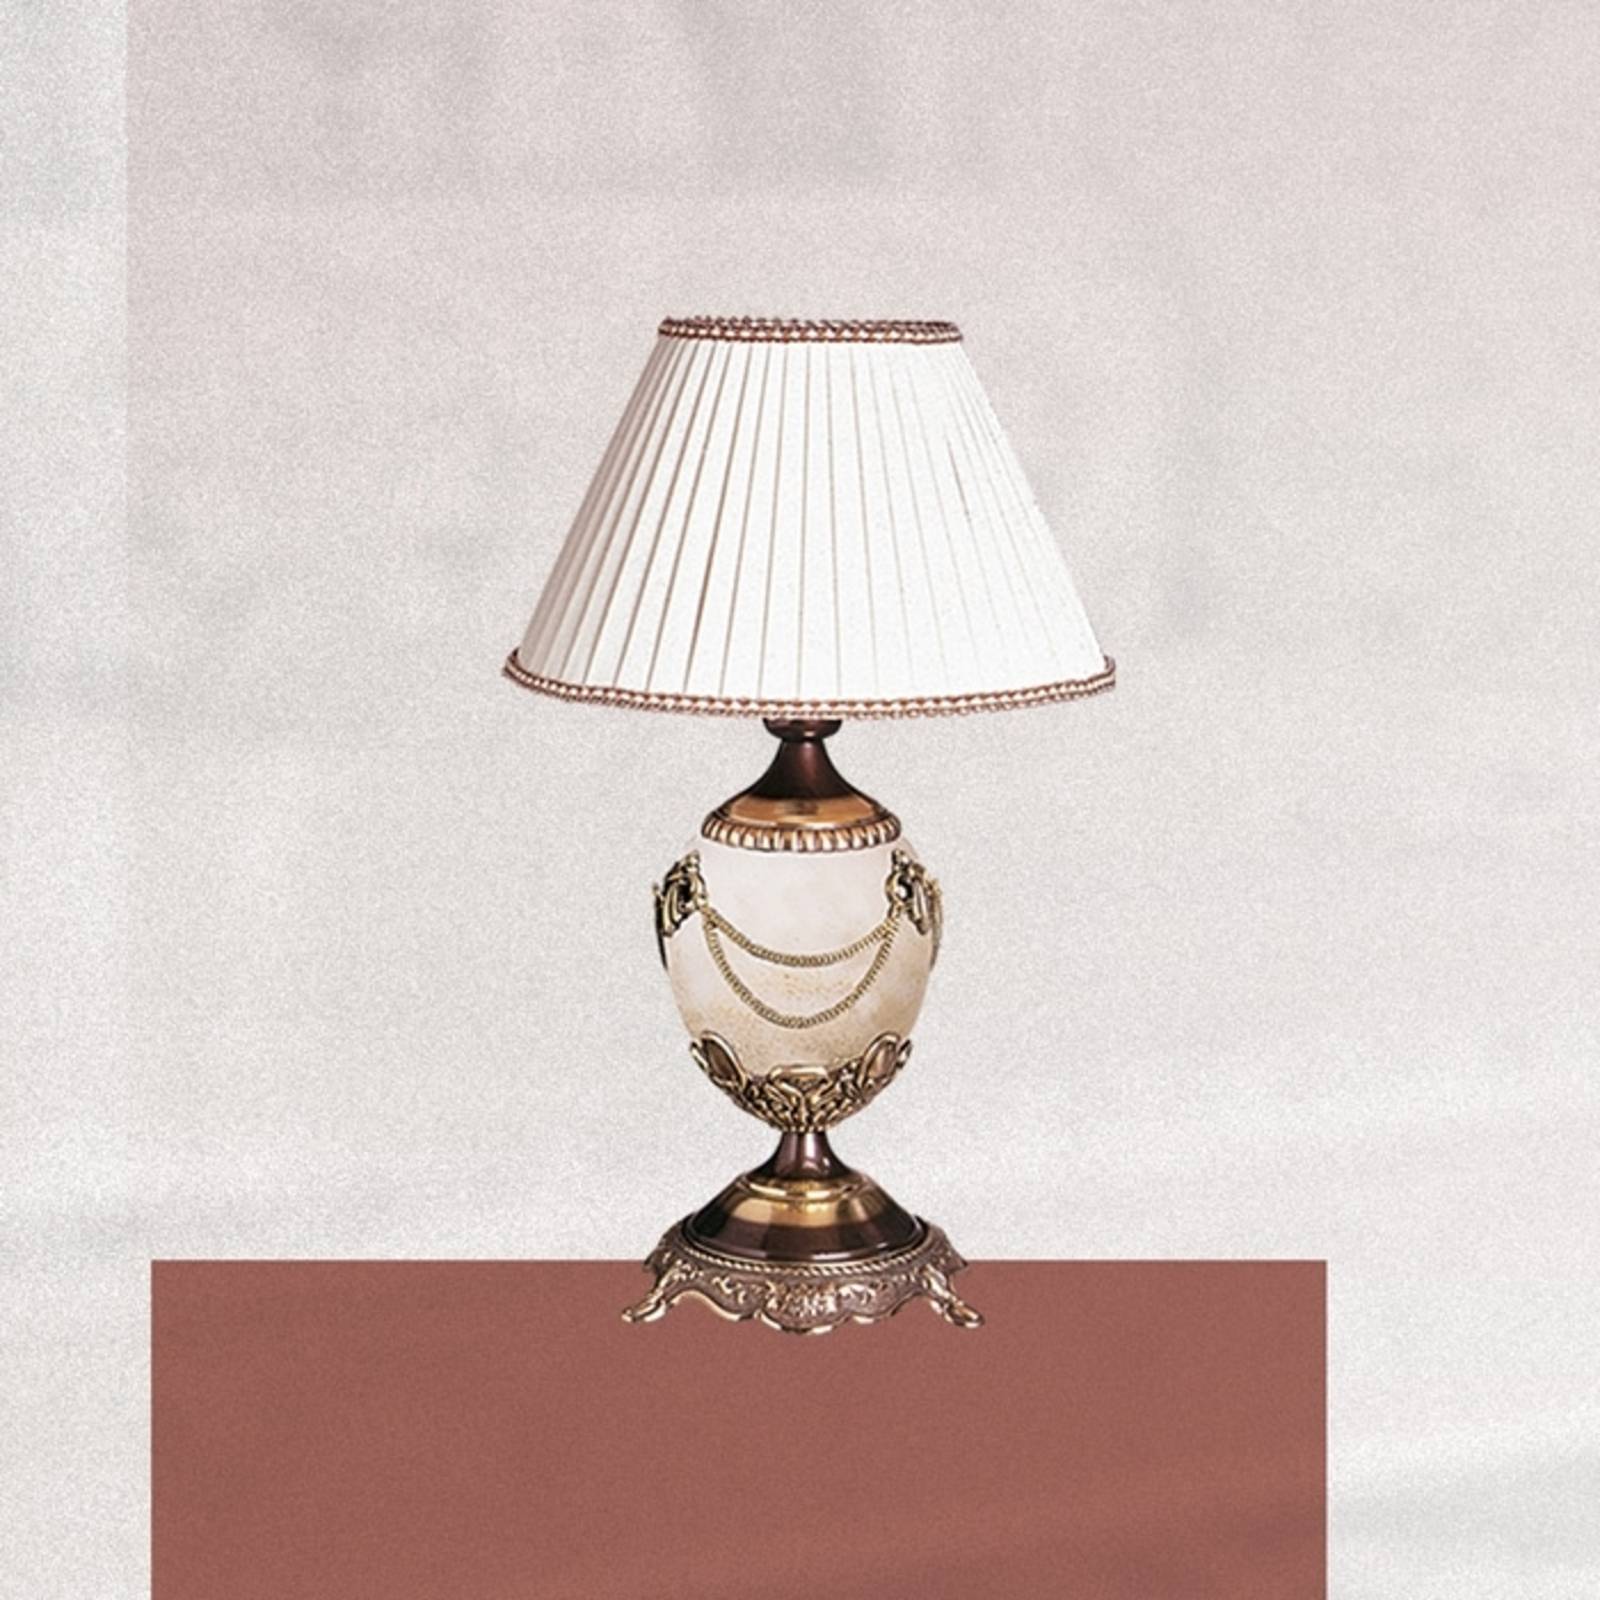 Zeer decoratieve tafellamp PRESTIGE, 47 cm